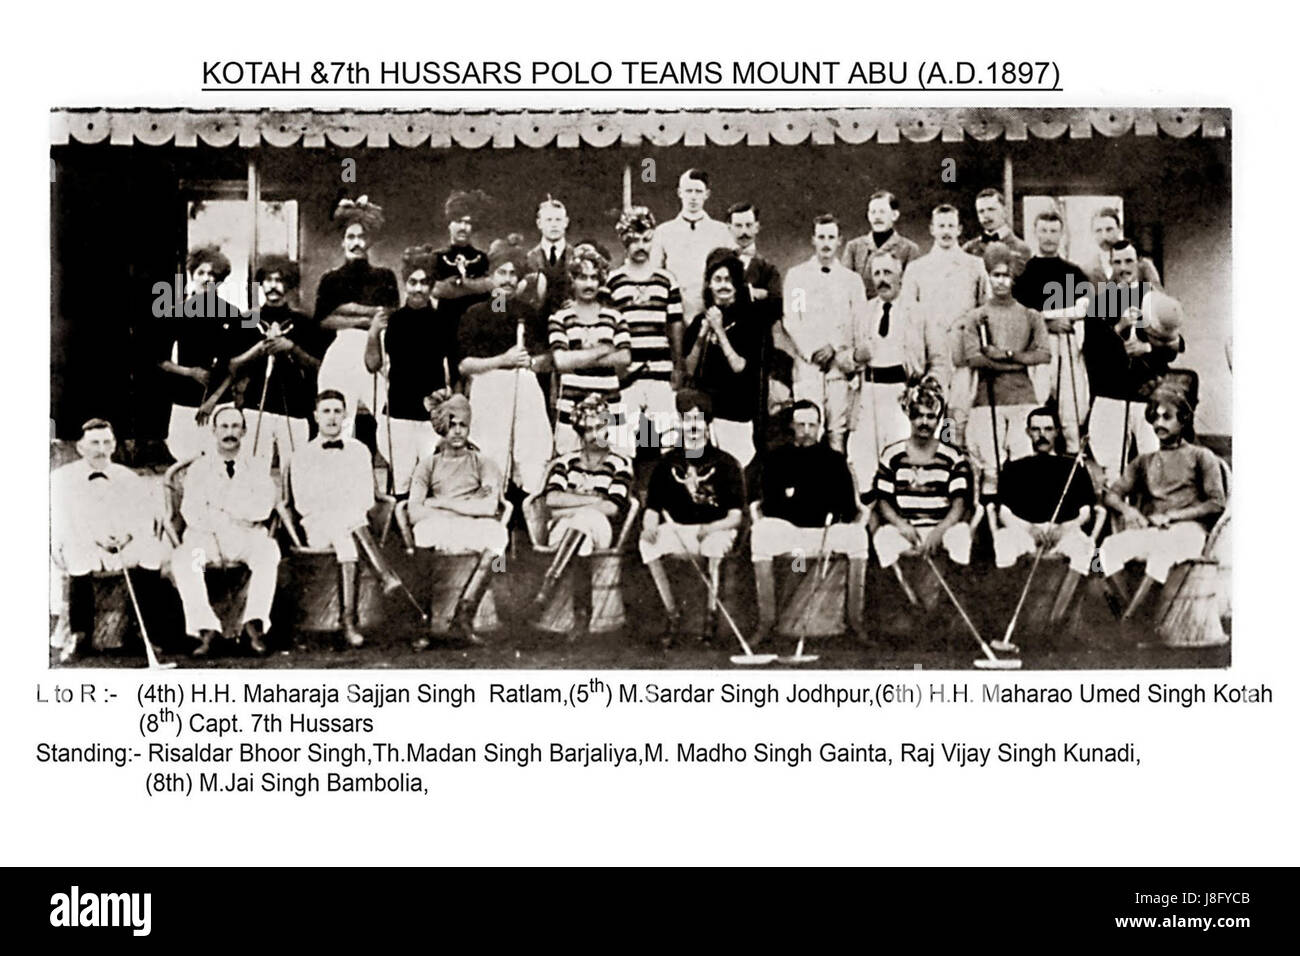 Kotah e 7° ussari polo team, Mount Abu nel 1897 Foto Stock